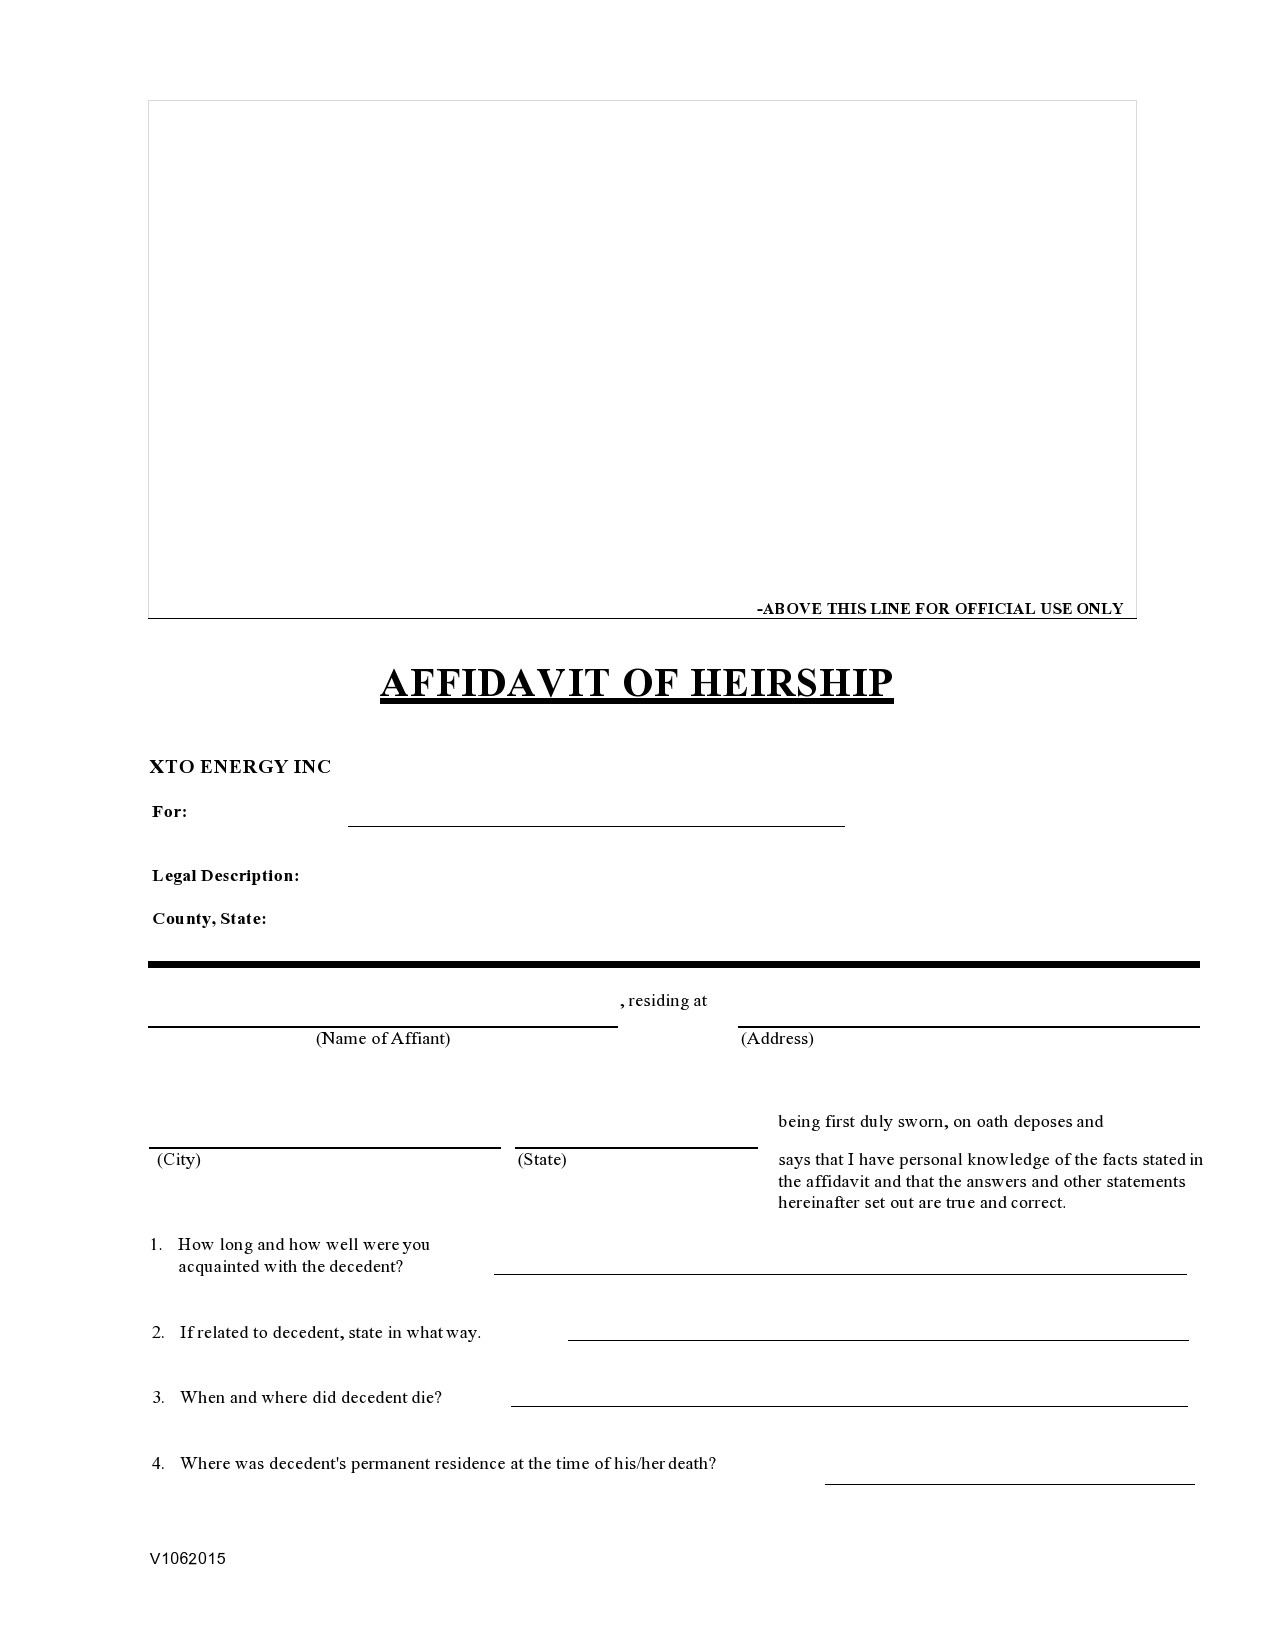 Free affidavit of heirship 08